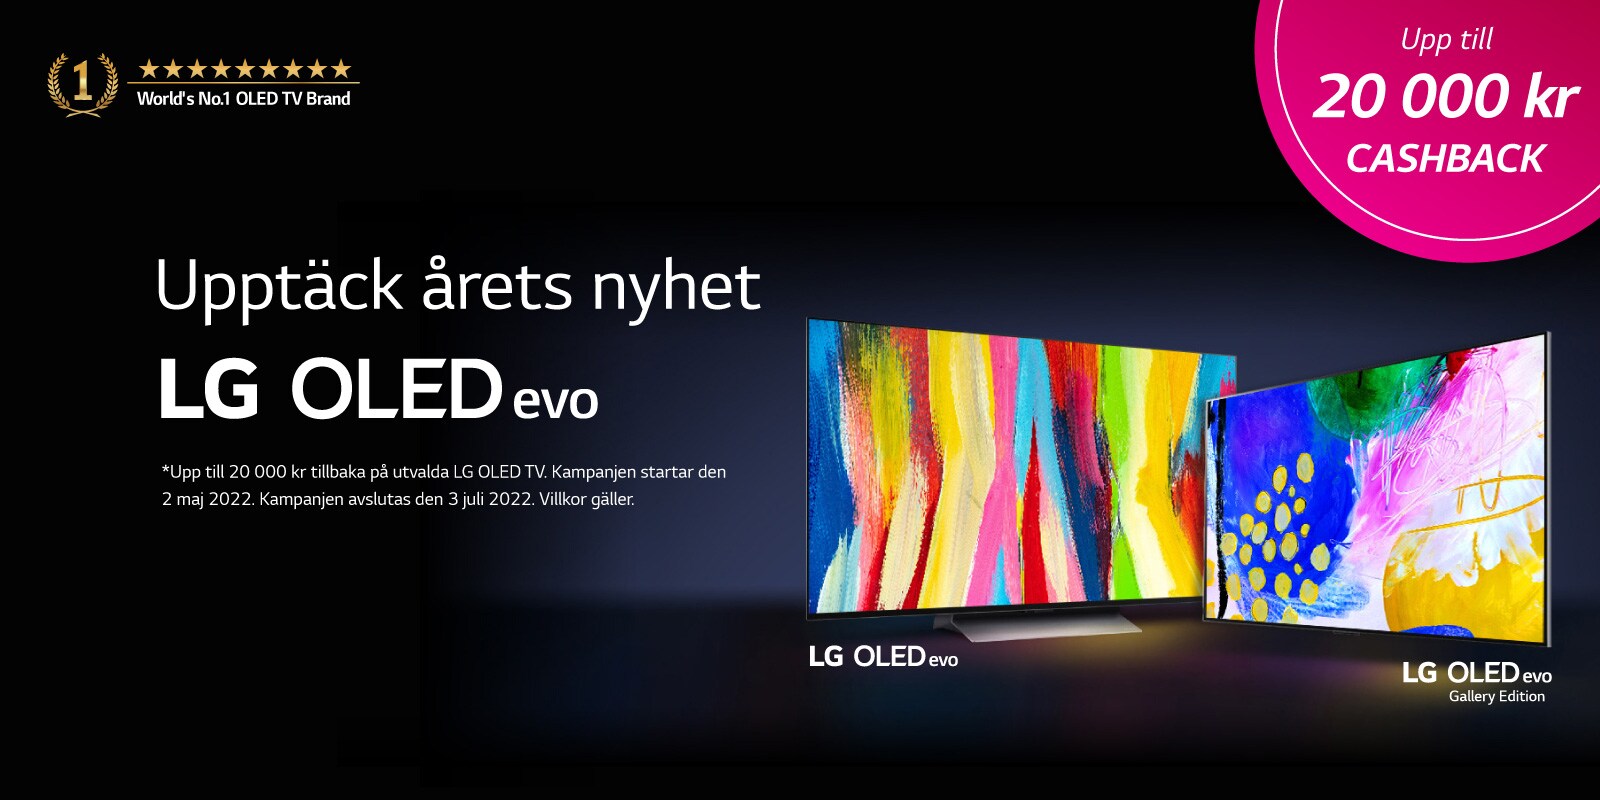 Nya LG OLED evo och LG OLED evo Gallery Edition